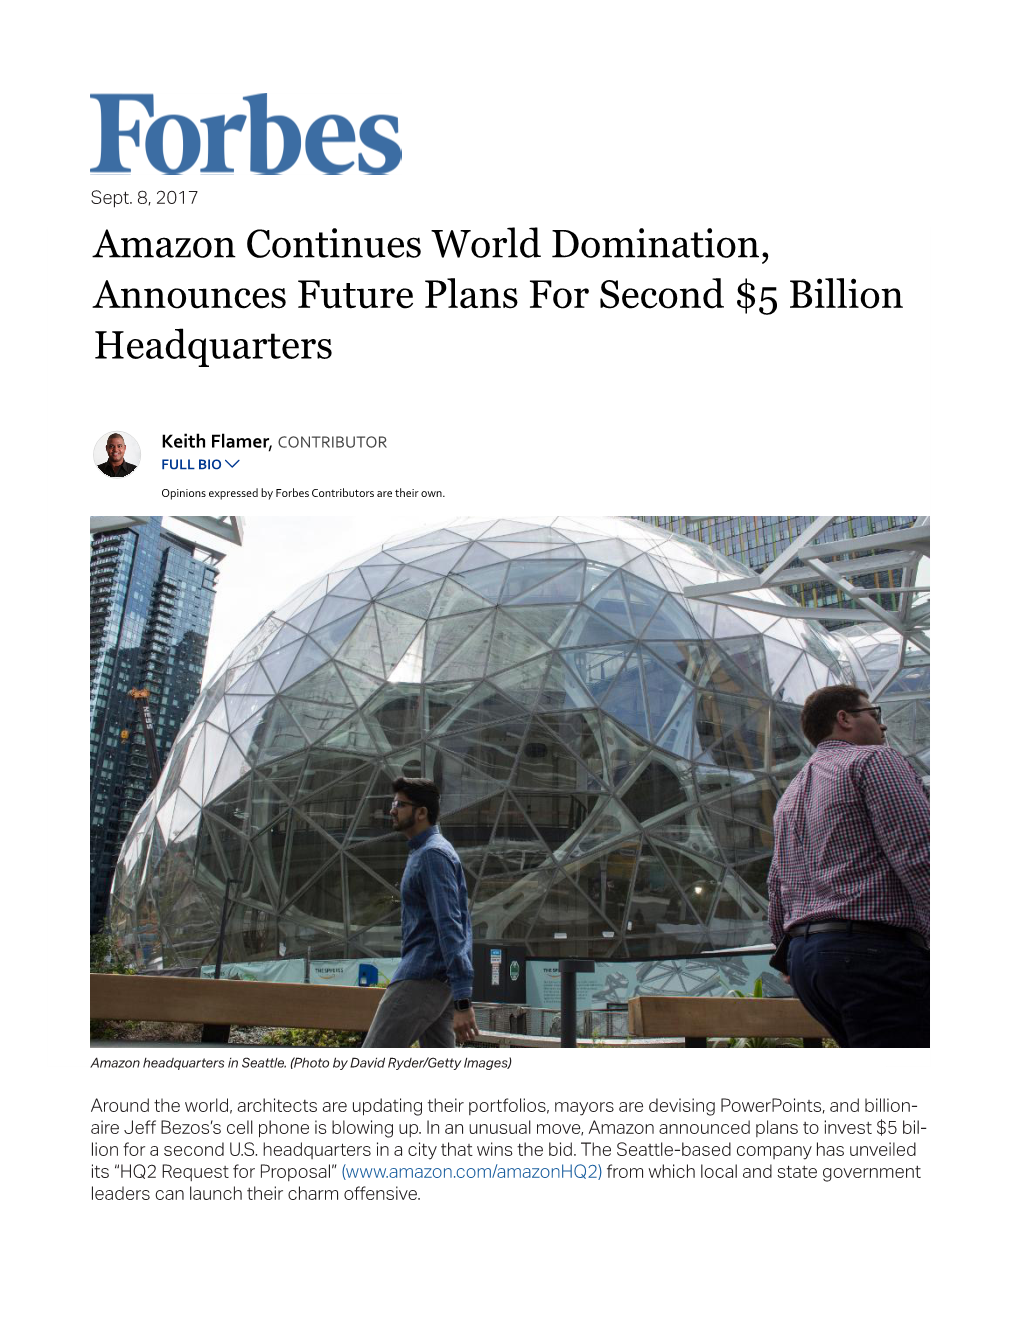 Amazon Continues World Domination, Announces Future Plans for Second $5 Billion Headquarters